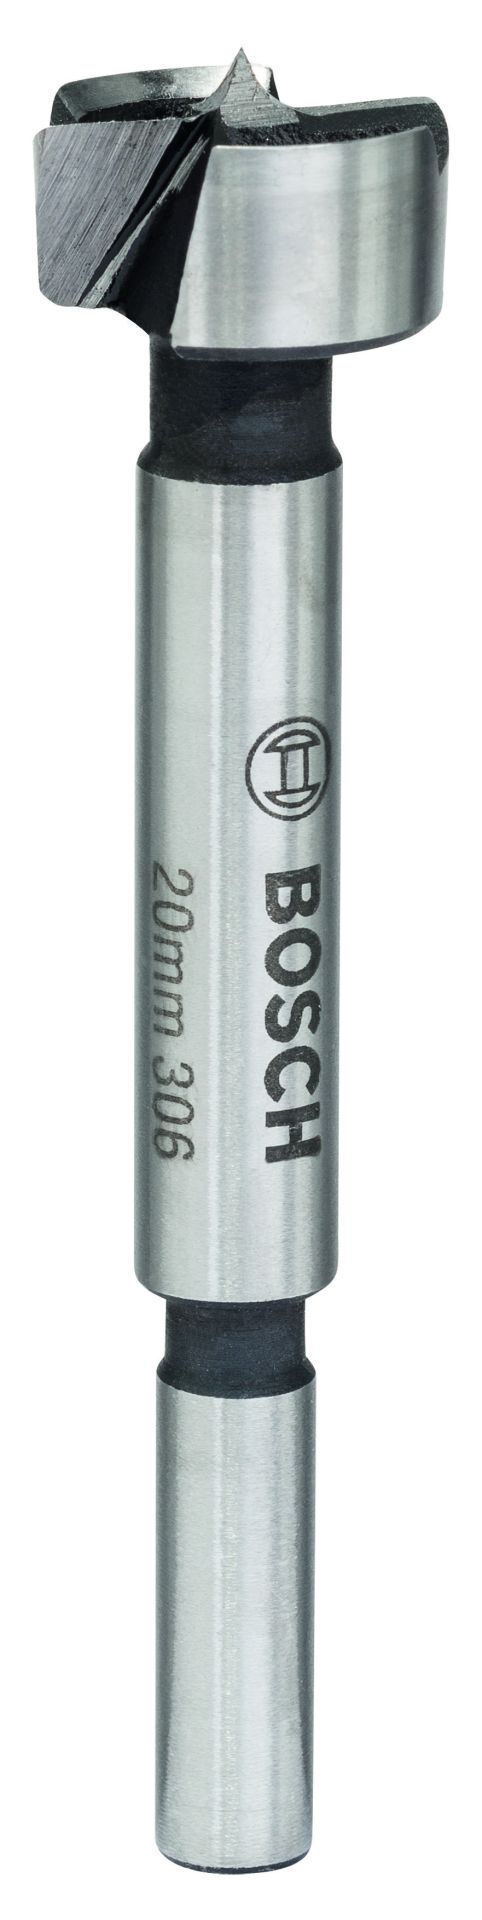 Bosch - Menteşe Açma Ucu 20 mm